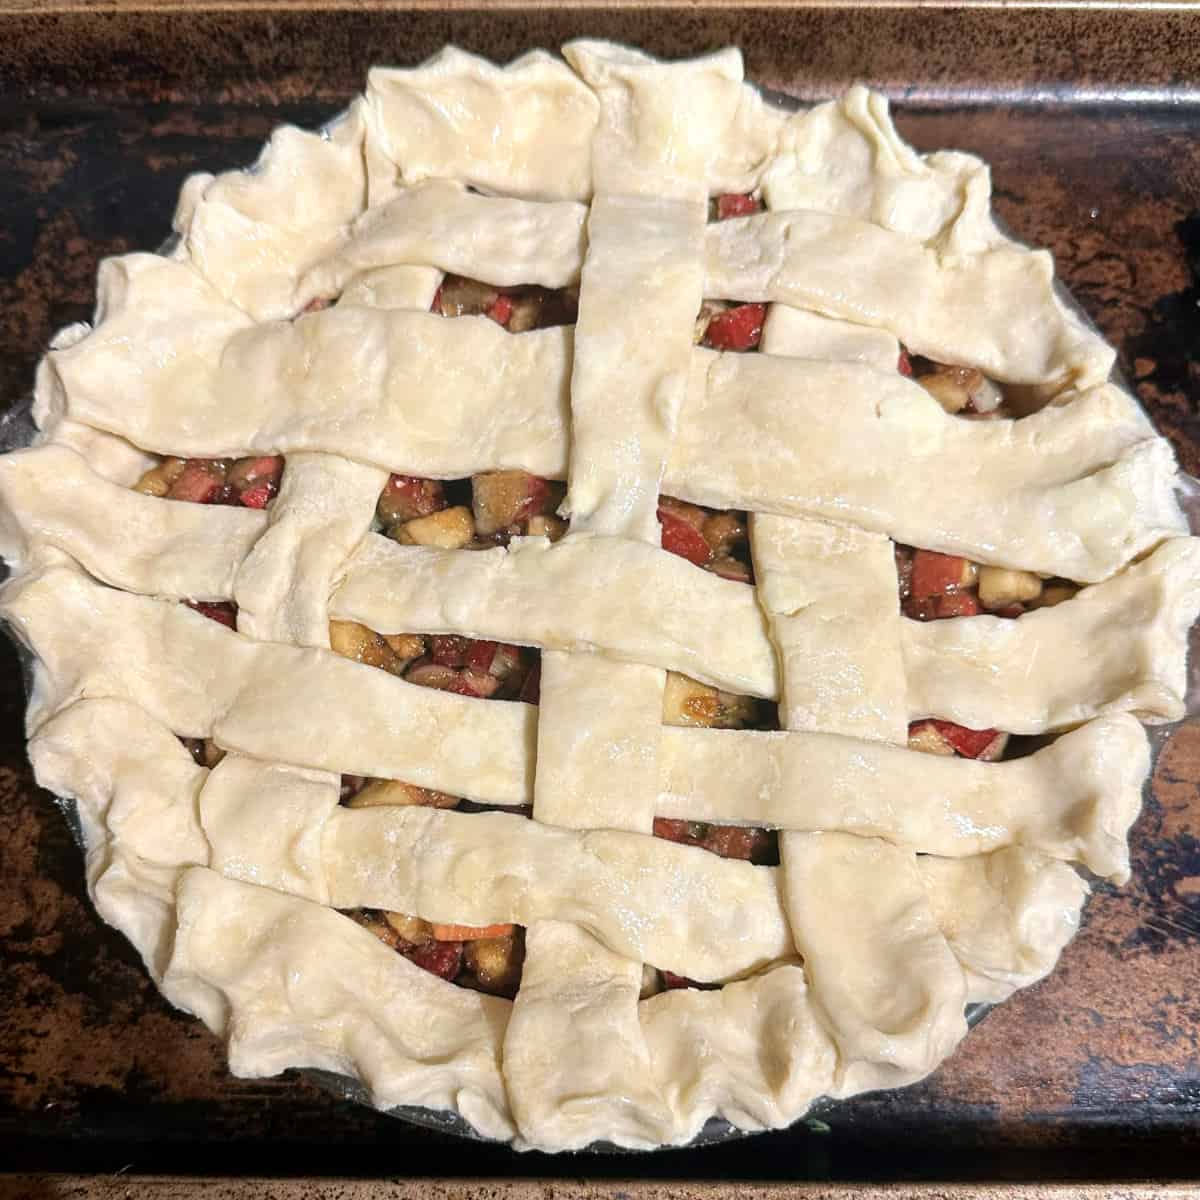 Rhubarb pie with lattice crust on baking sheet before baking.